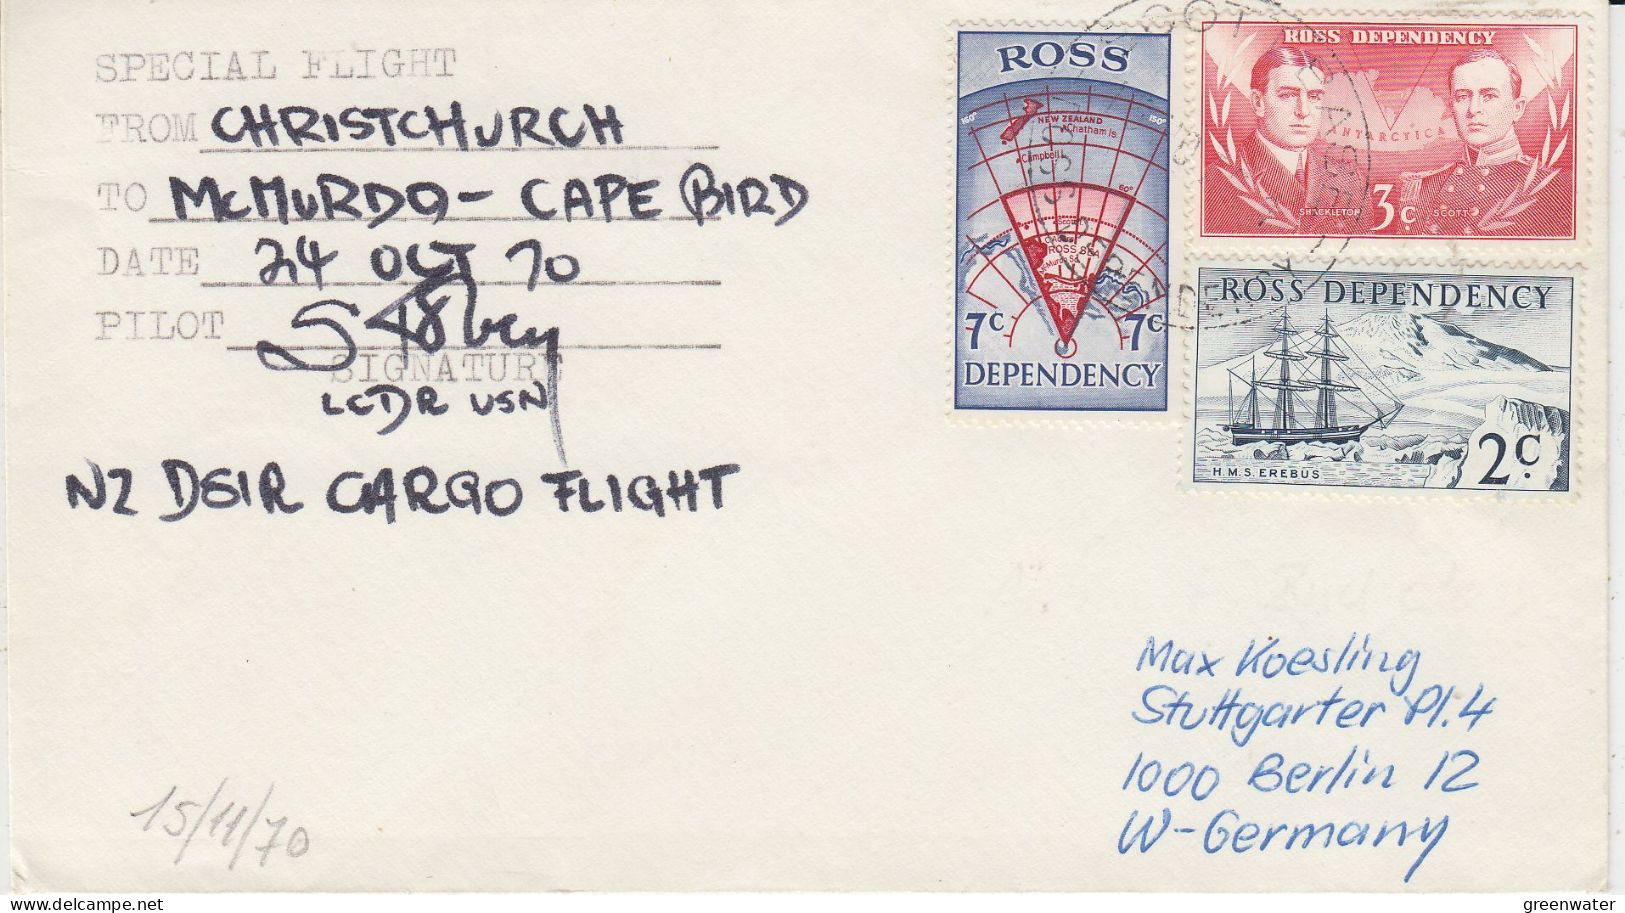 Ross Dependency Flight From Christchurch To McMurdo - Cape Bird 24 OCT 1970 Ca Scott Base (SO194) - Polar Flights